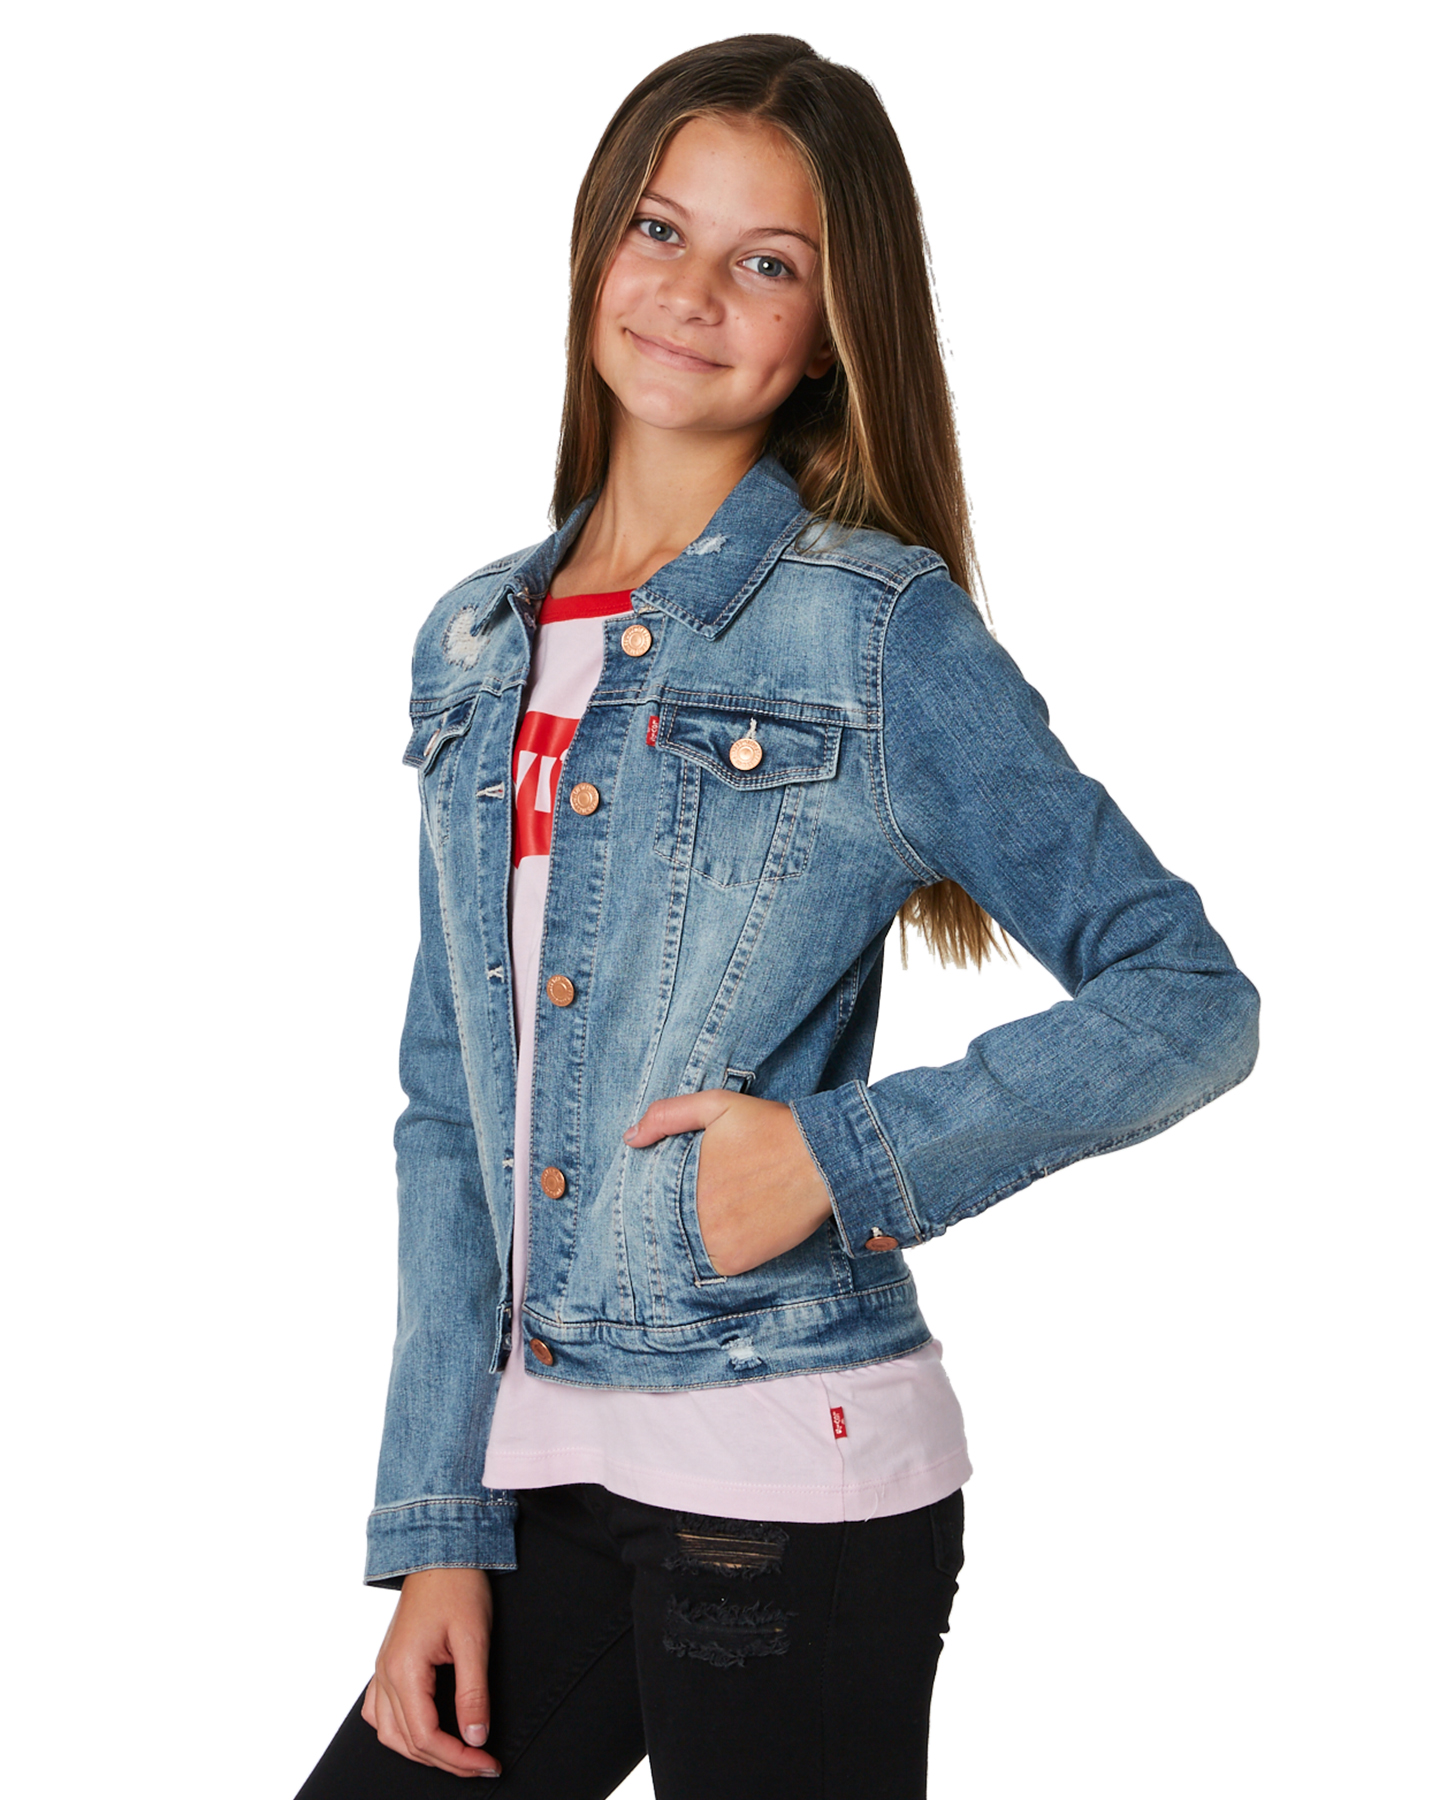 levis jacket for girls